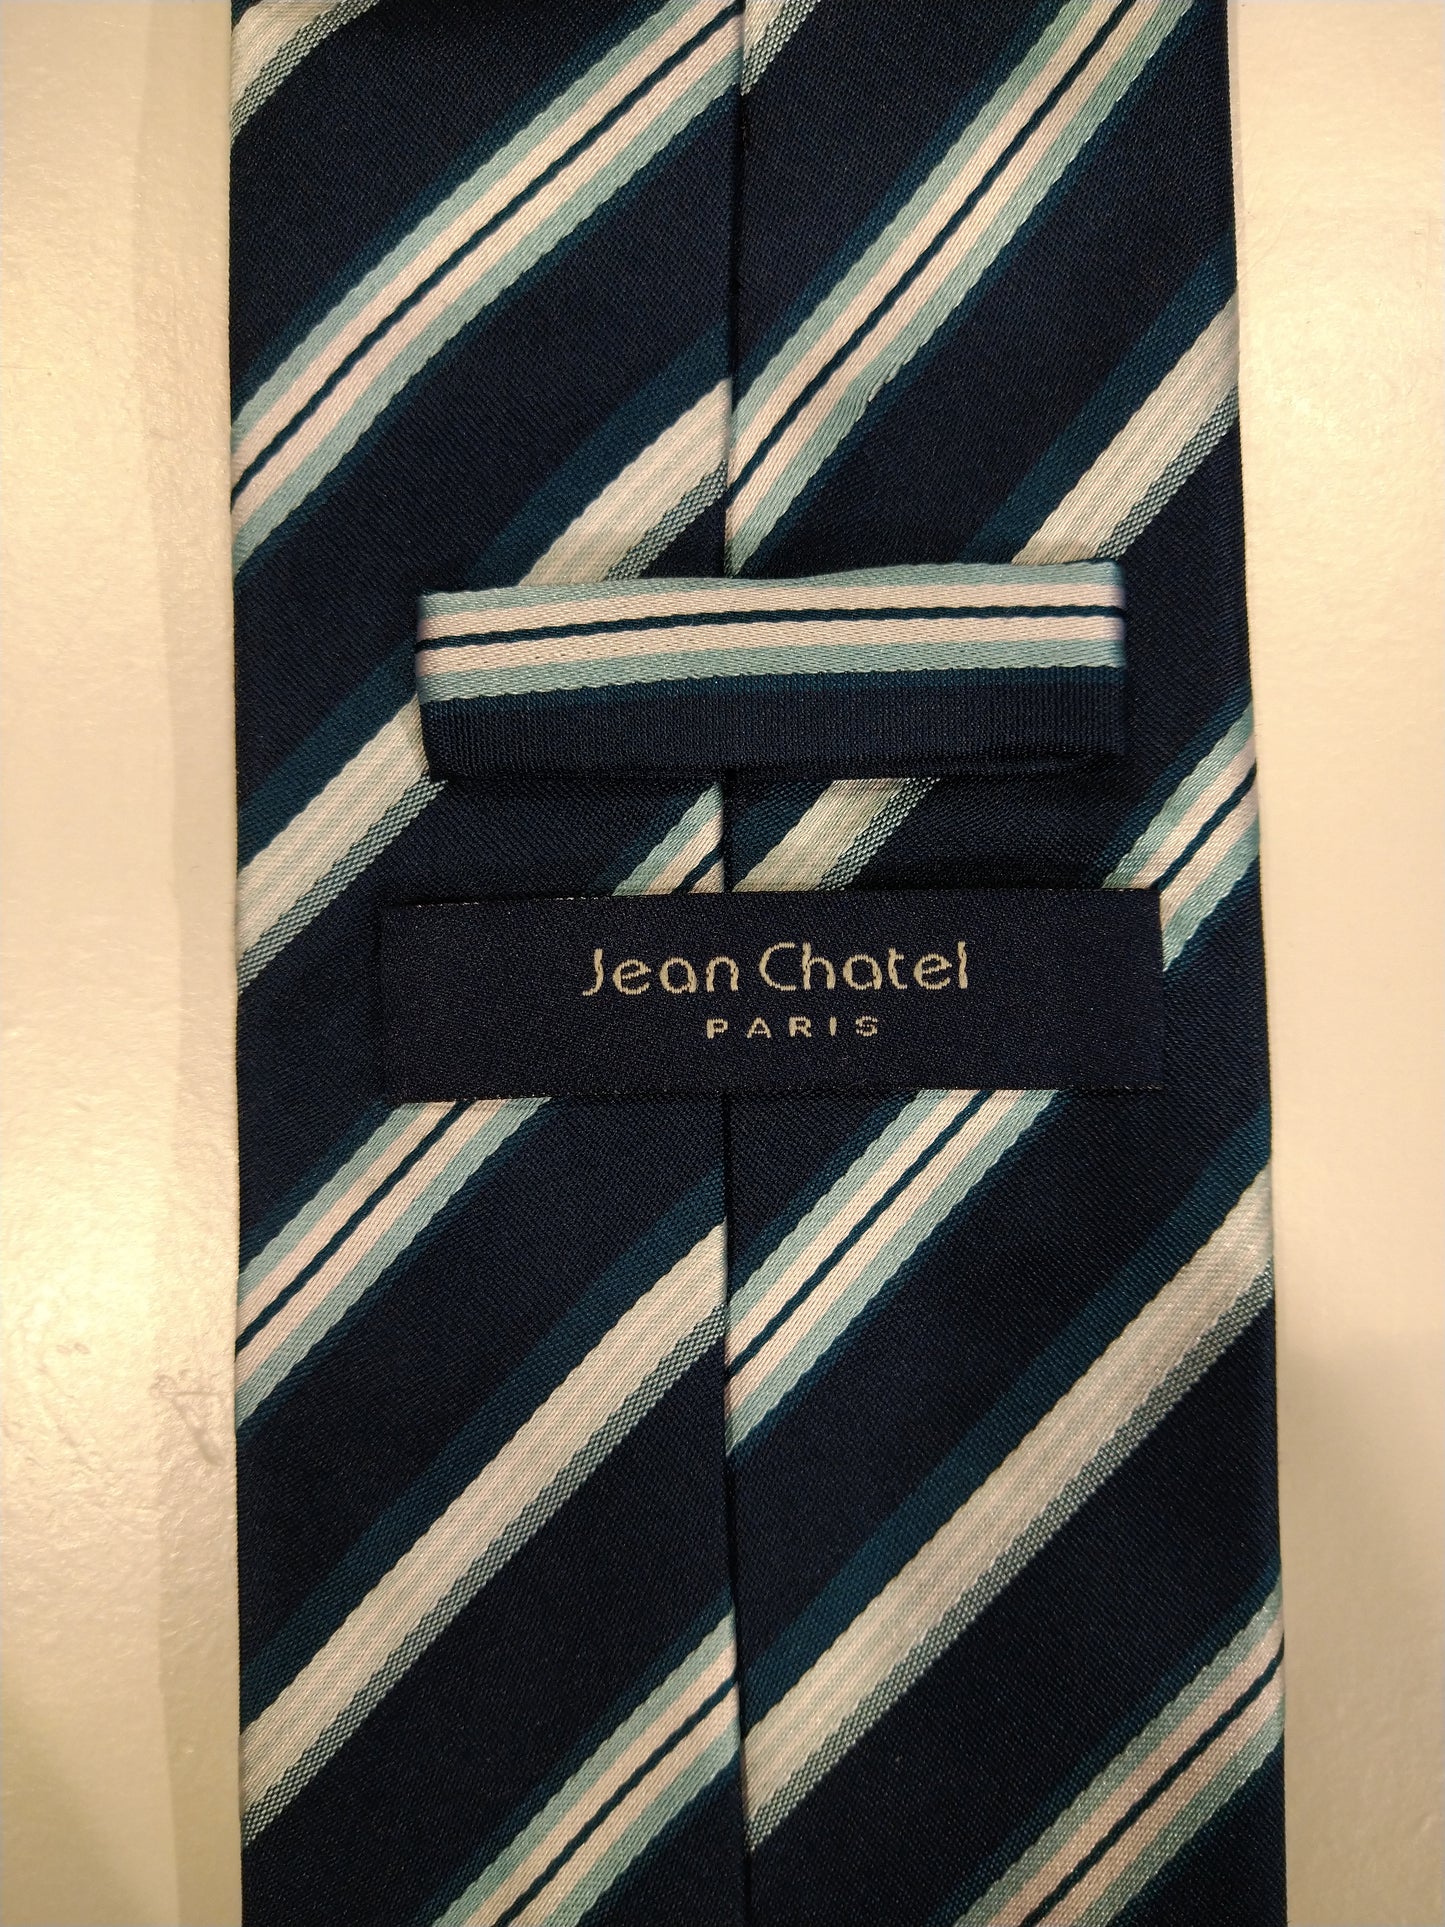 Jean Chatel Paris silk tie. Blue white striped.